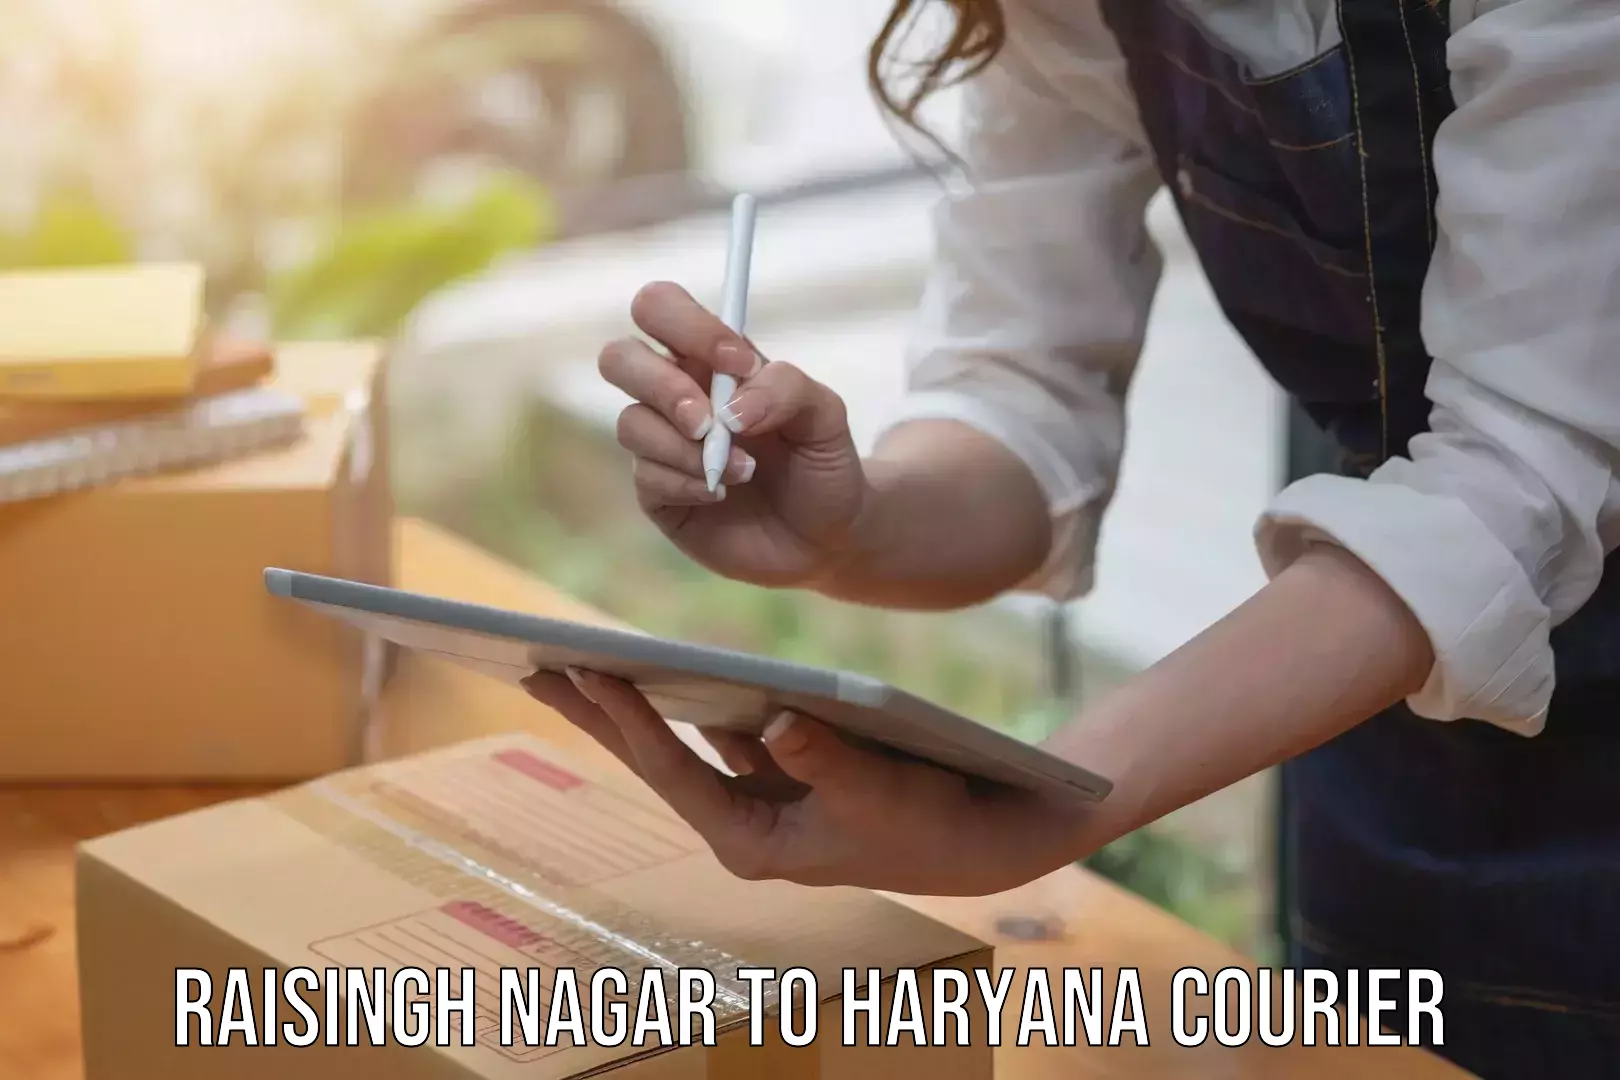 Courier service comparison Raisingh Nagar to Bahal